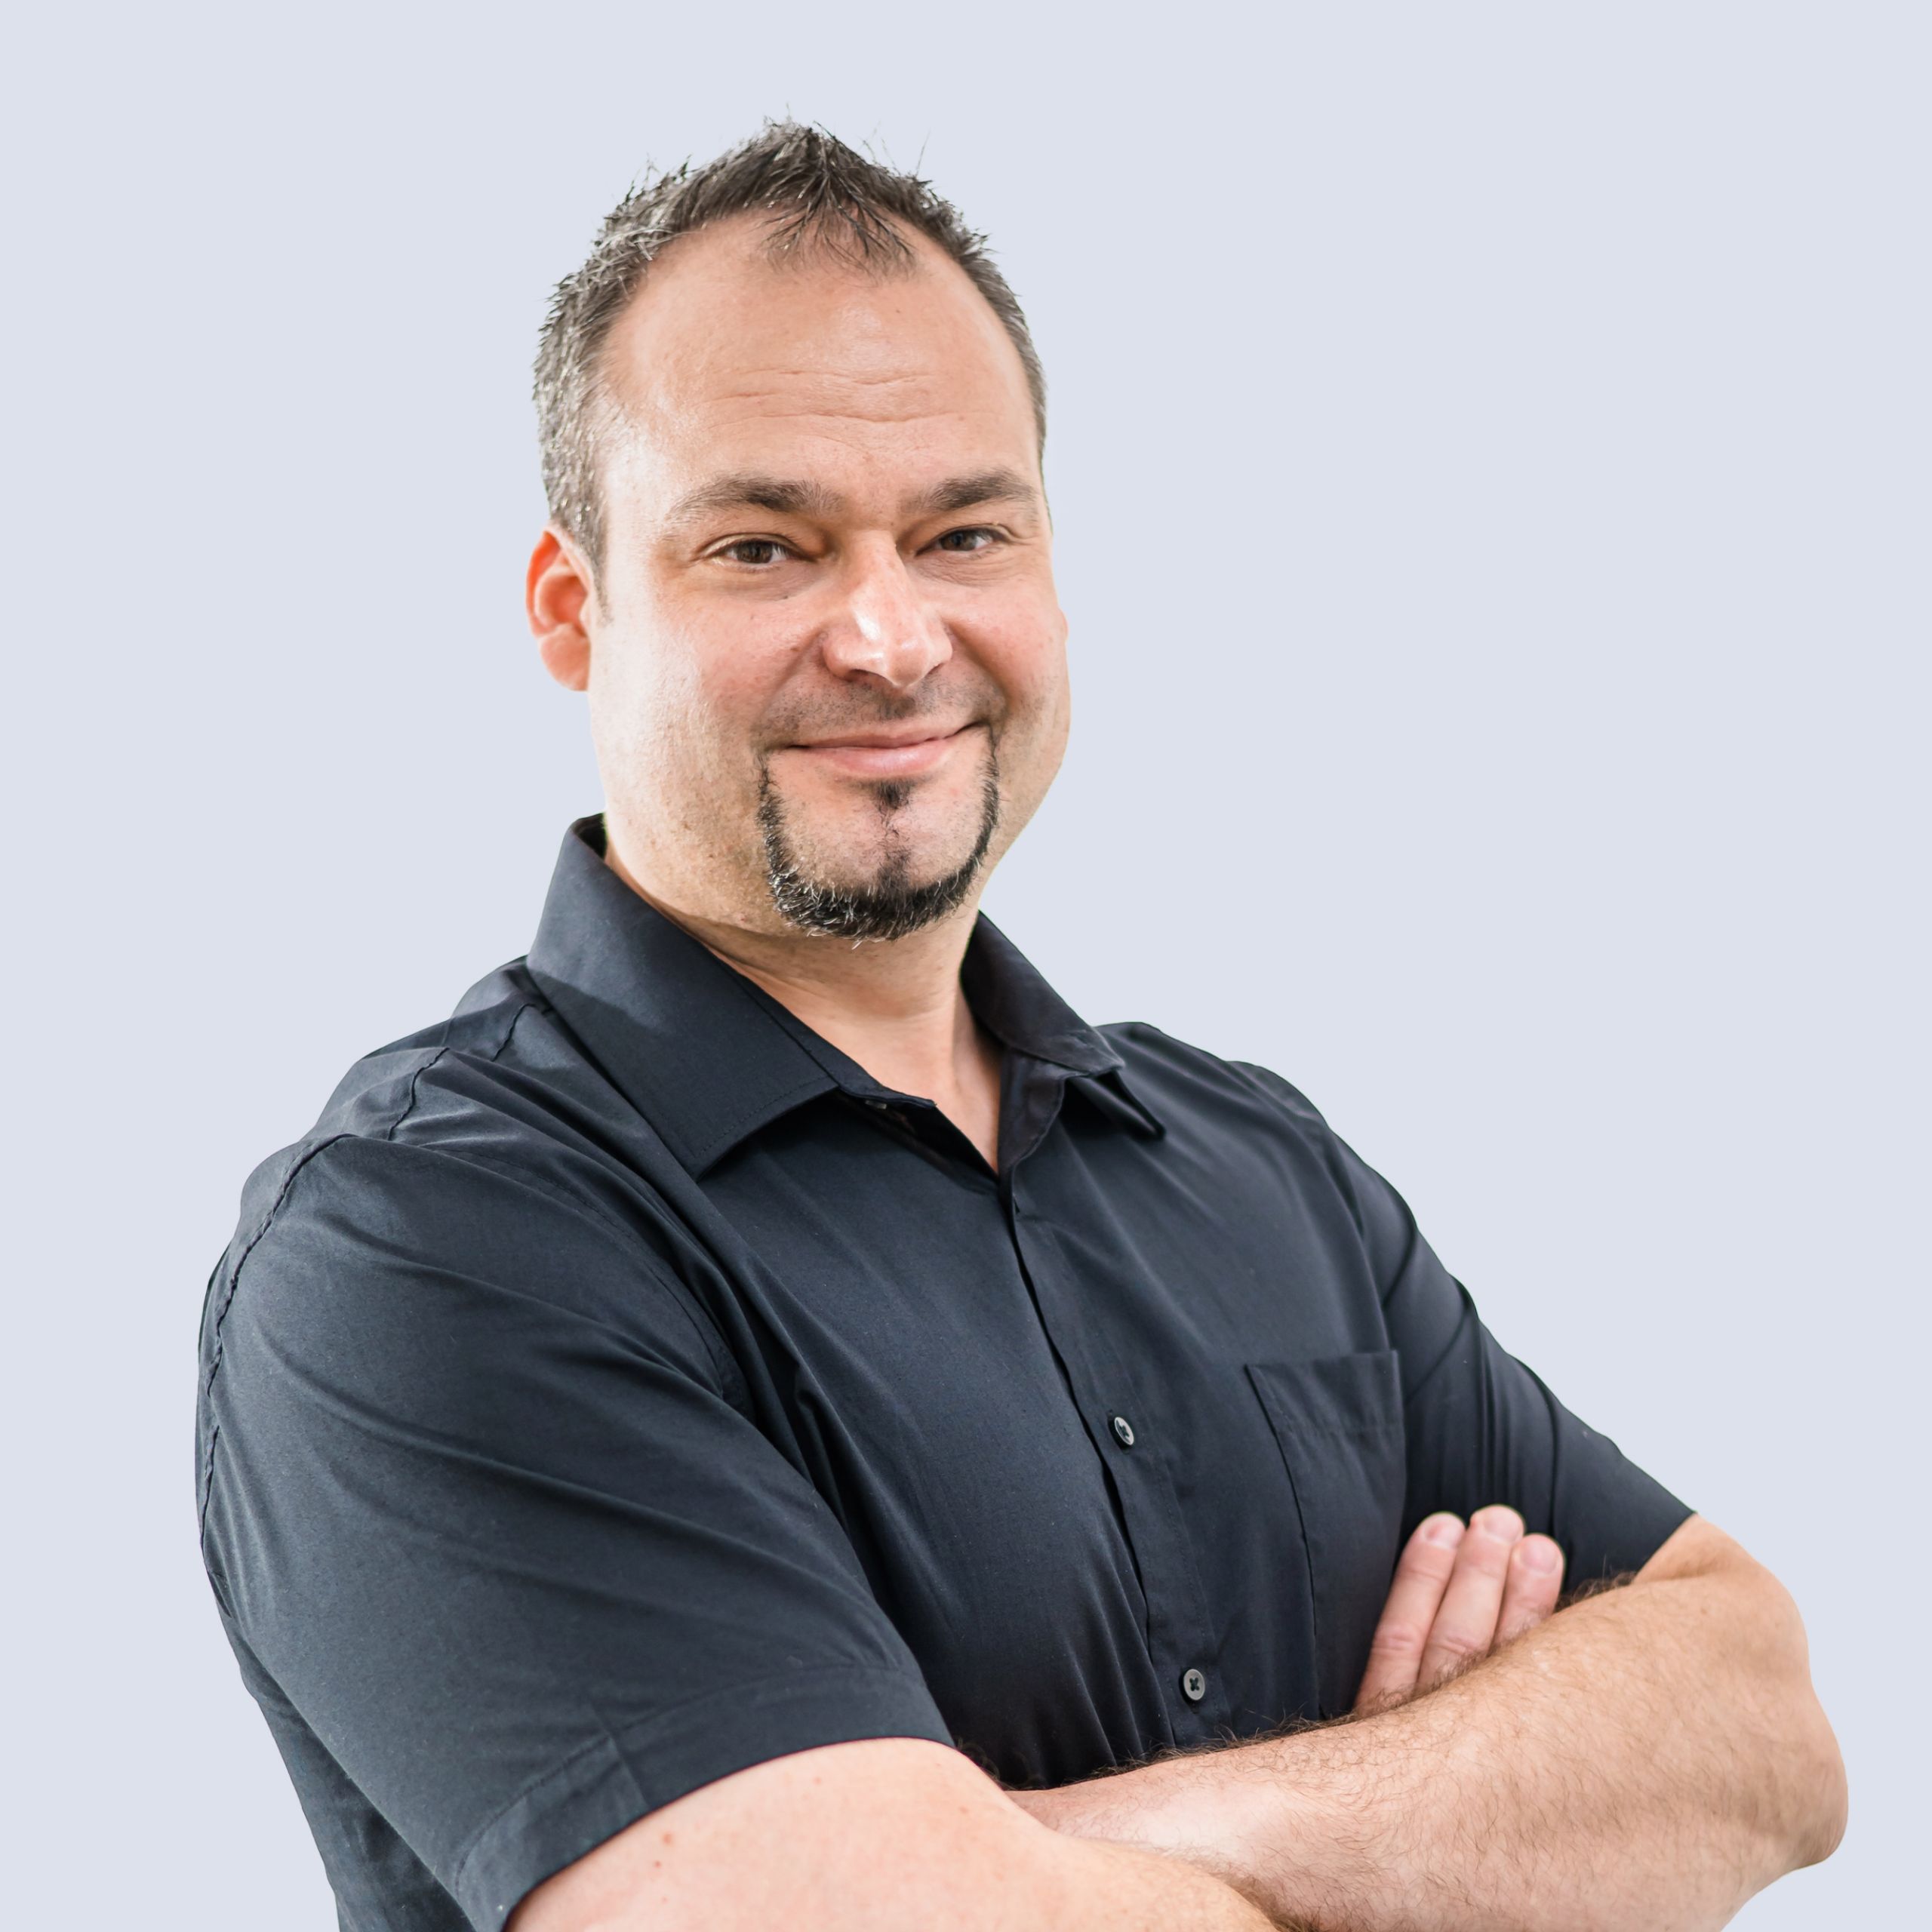 André Kremer ist Teamlead SEO bei der Online Marketing Agentur clicks digital GmbH